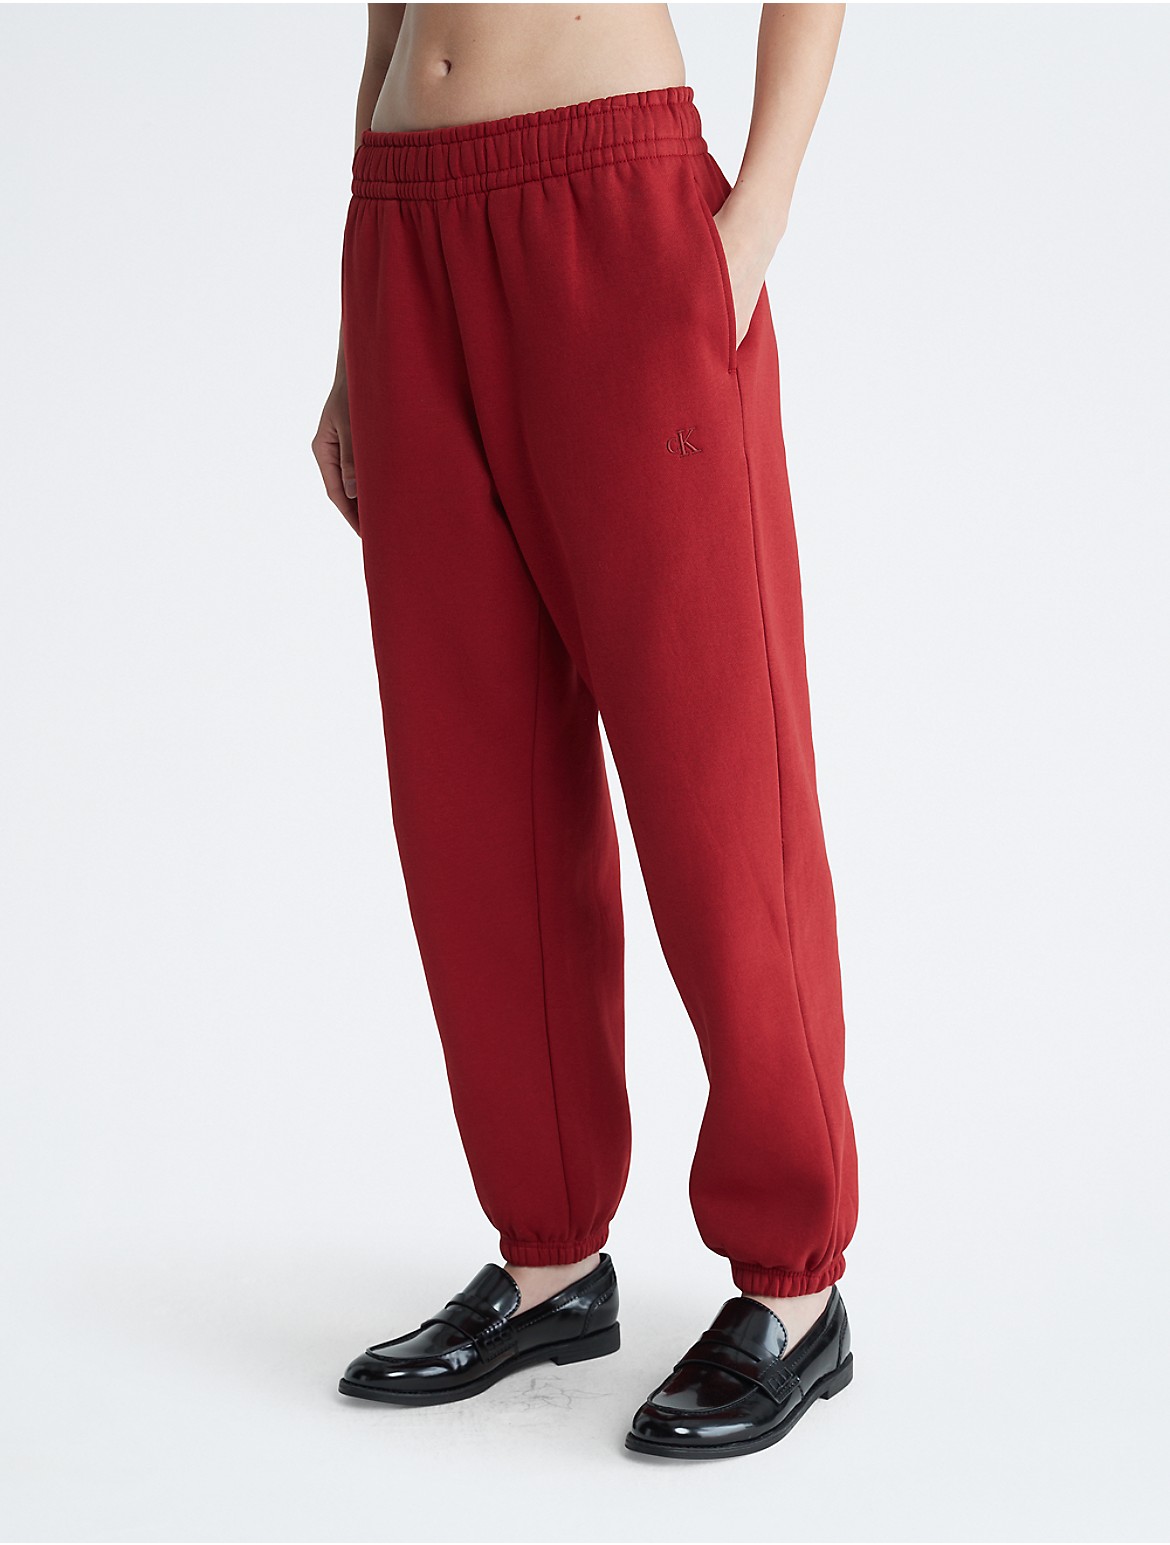 Calvin Klein Women's Archive Logo Fleece Joggers - Red - XL